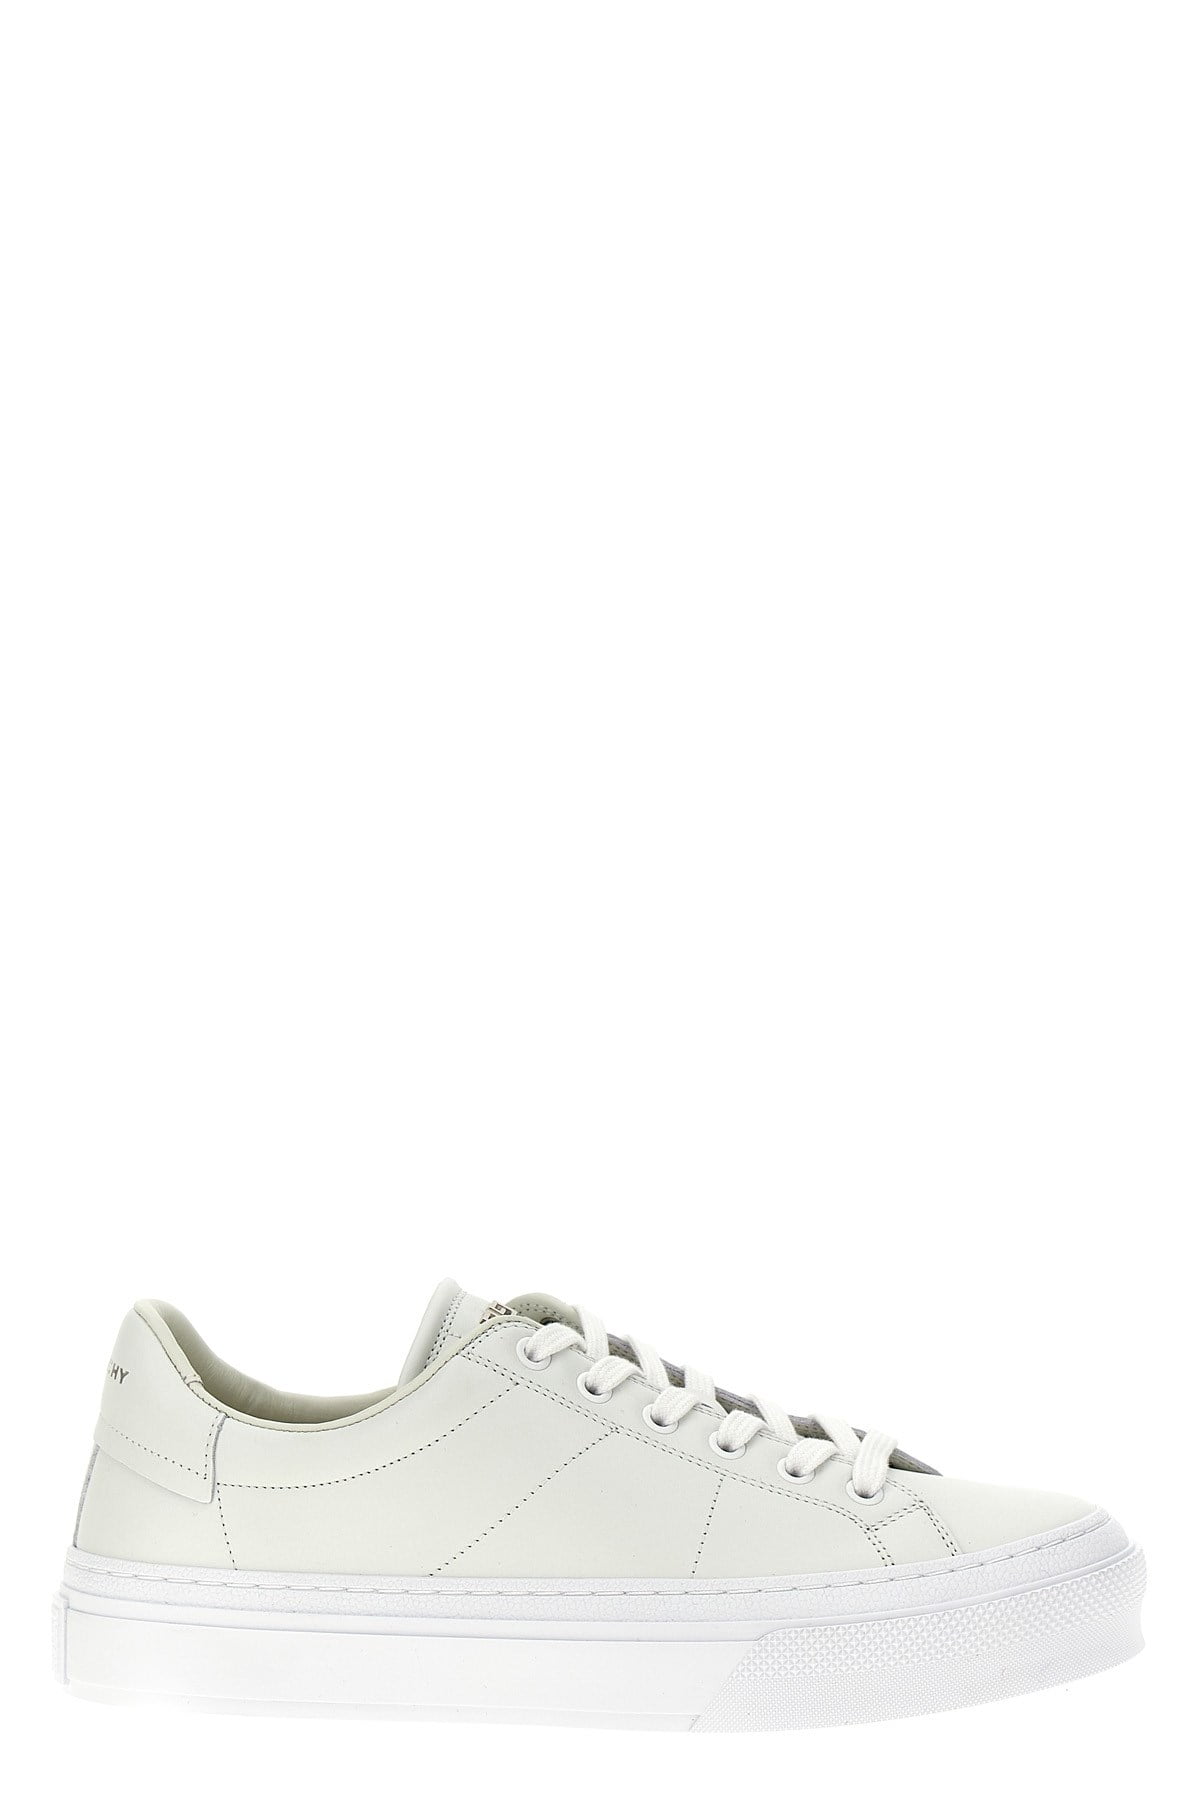 Givenchy Men 'City Sport' Sneakers - Walmart.com